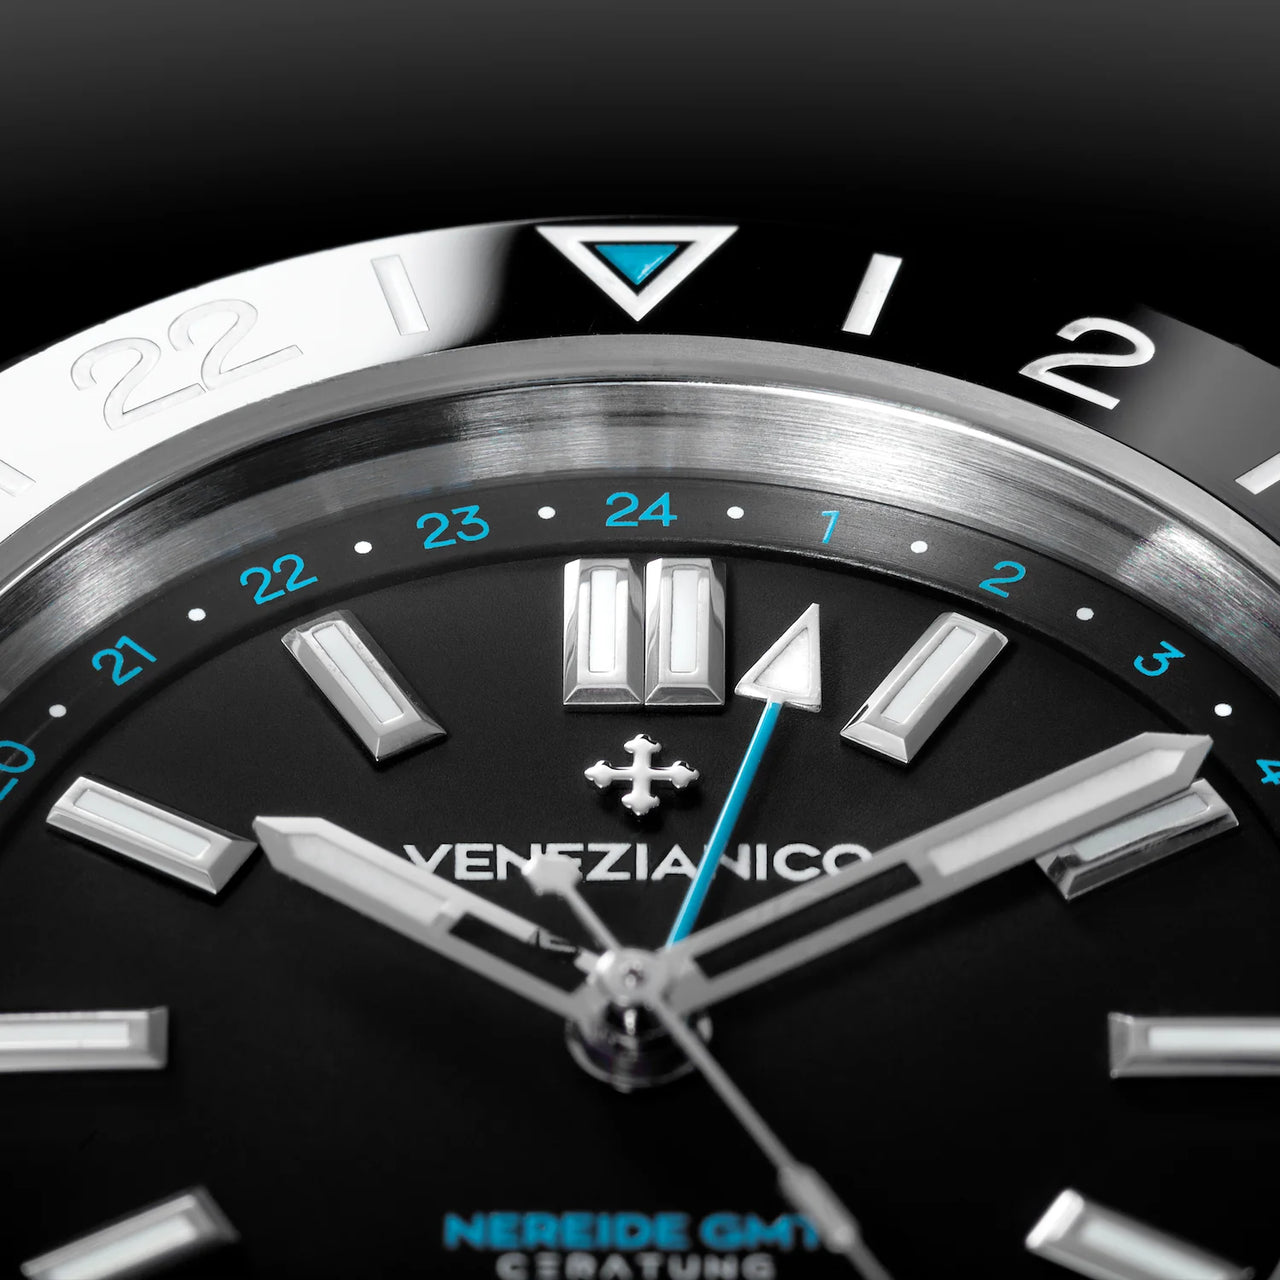 Venezianico Automatic Watch Nereide GMT Ceratung™ 4821501C